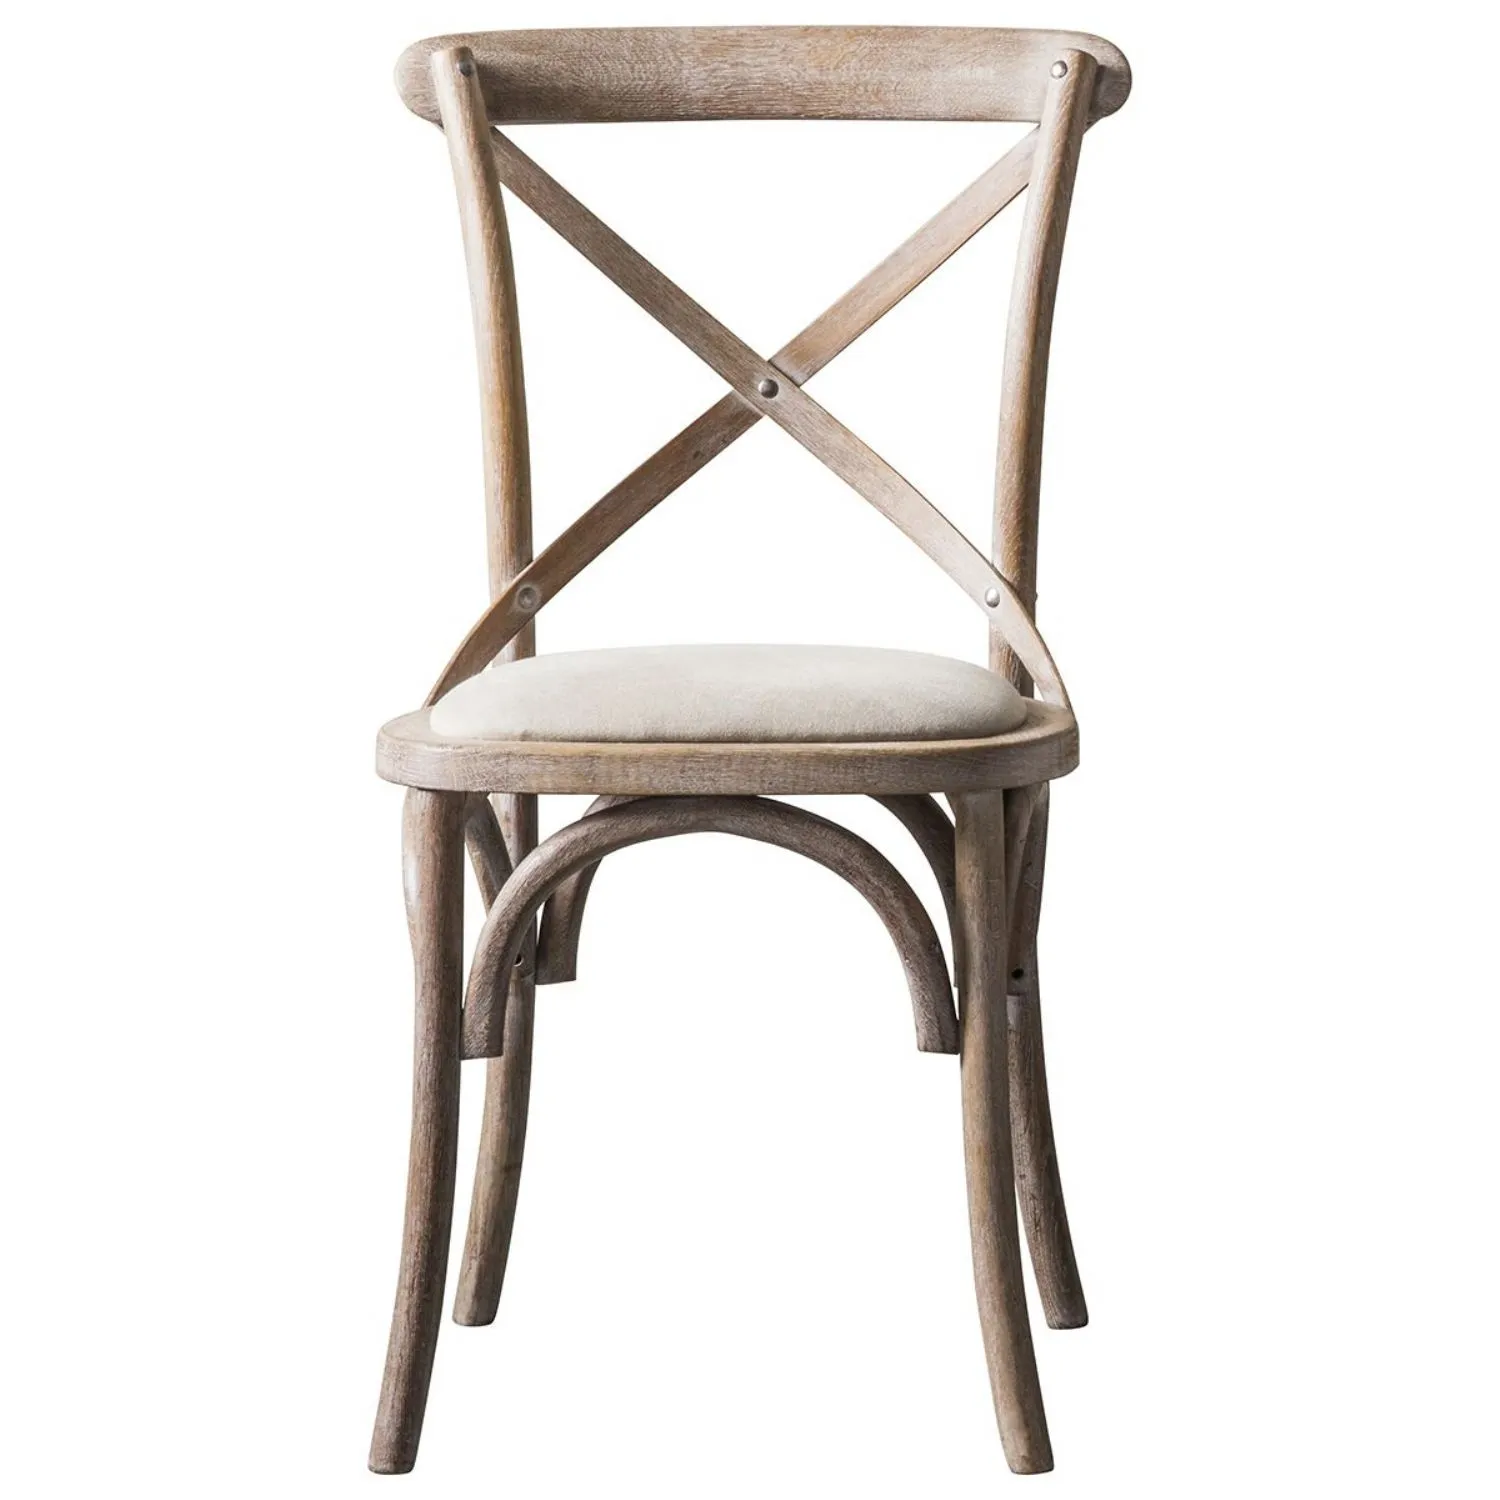 Farmhouse Natural Wooden Cafe Chair Cross Back Design